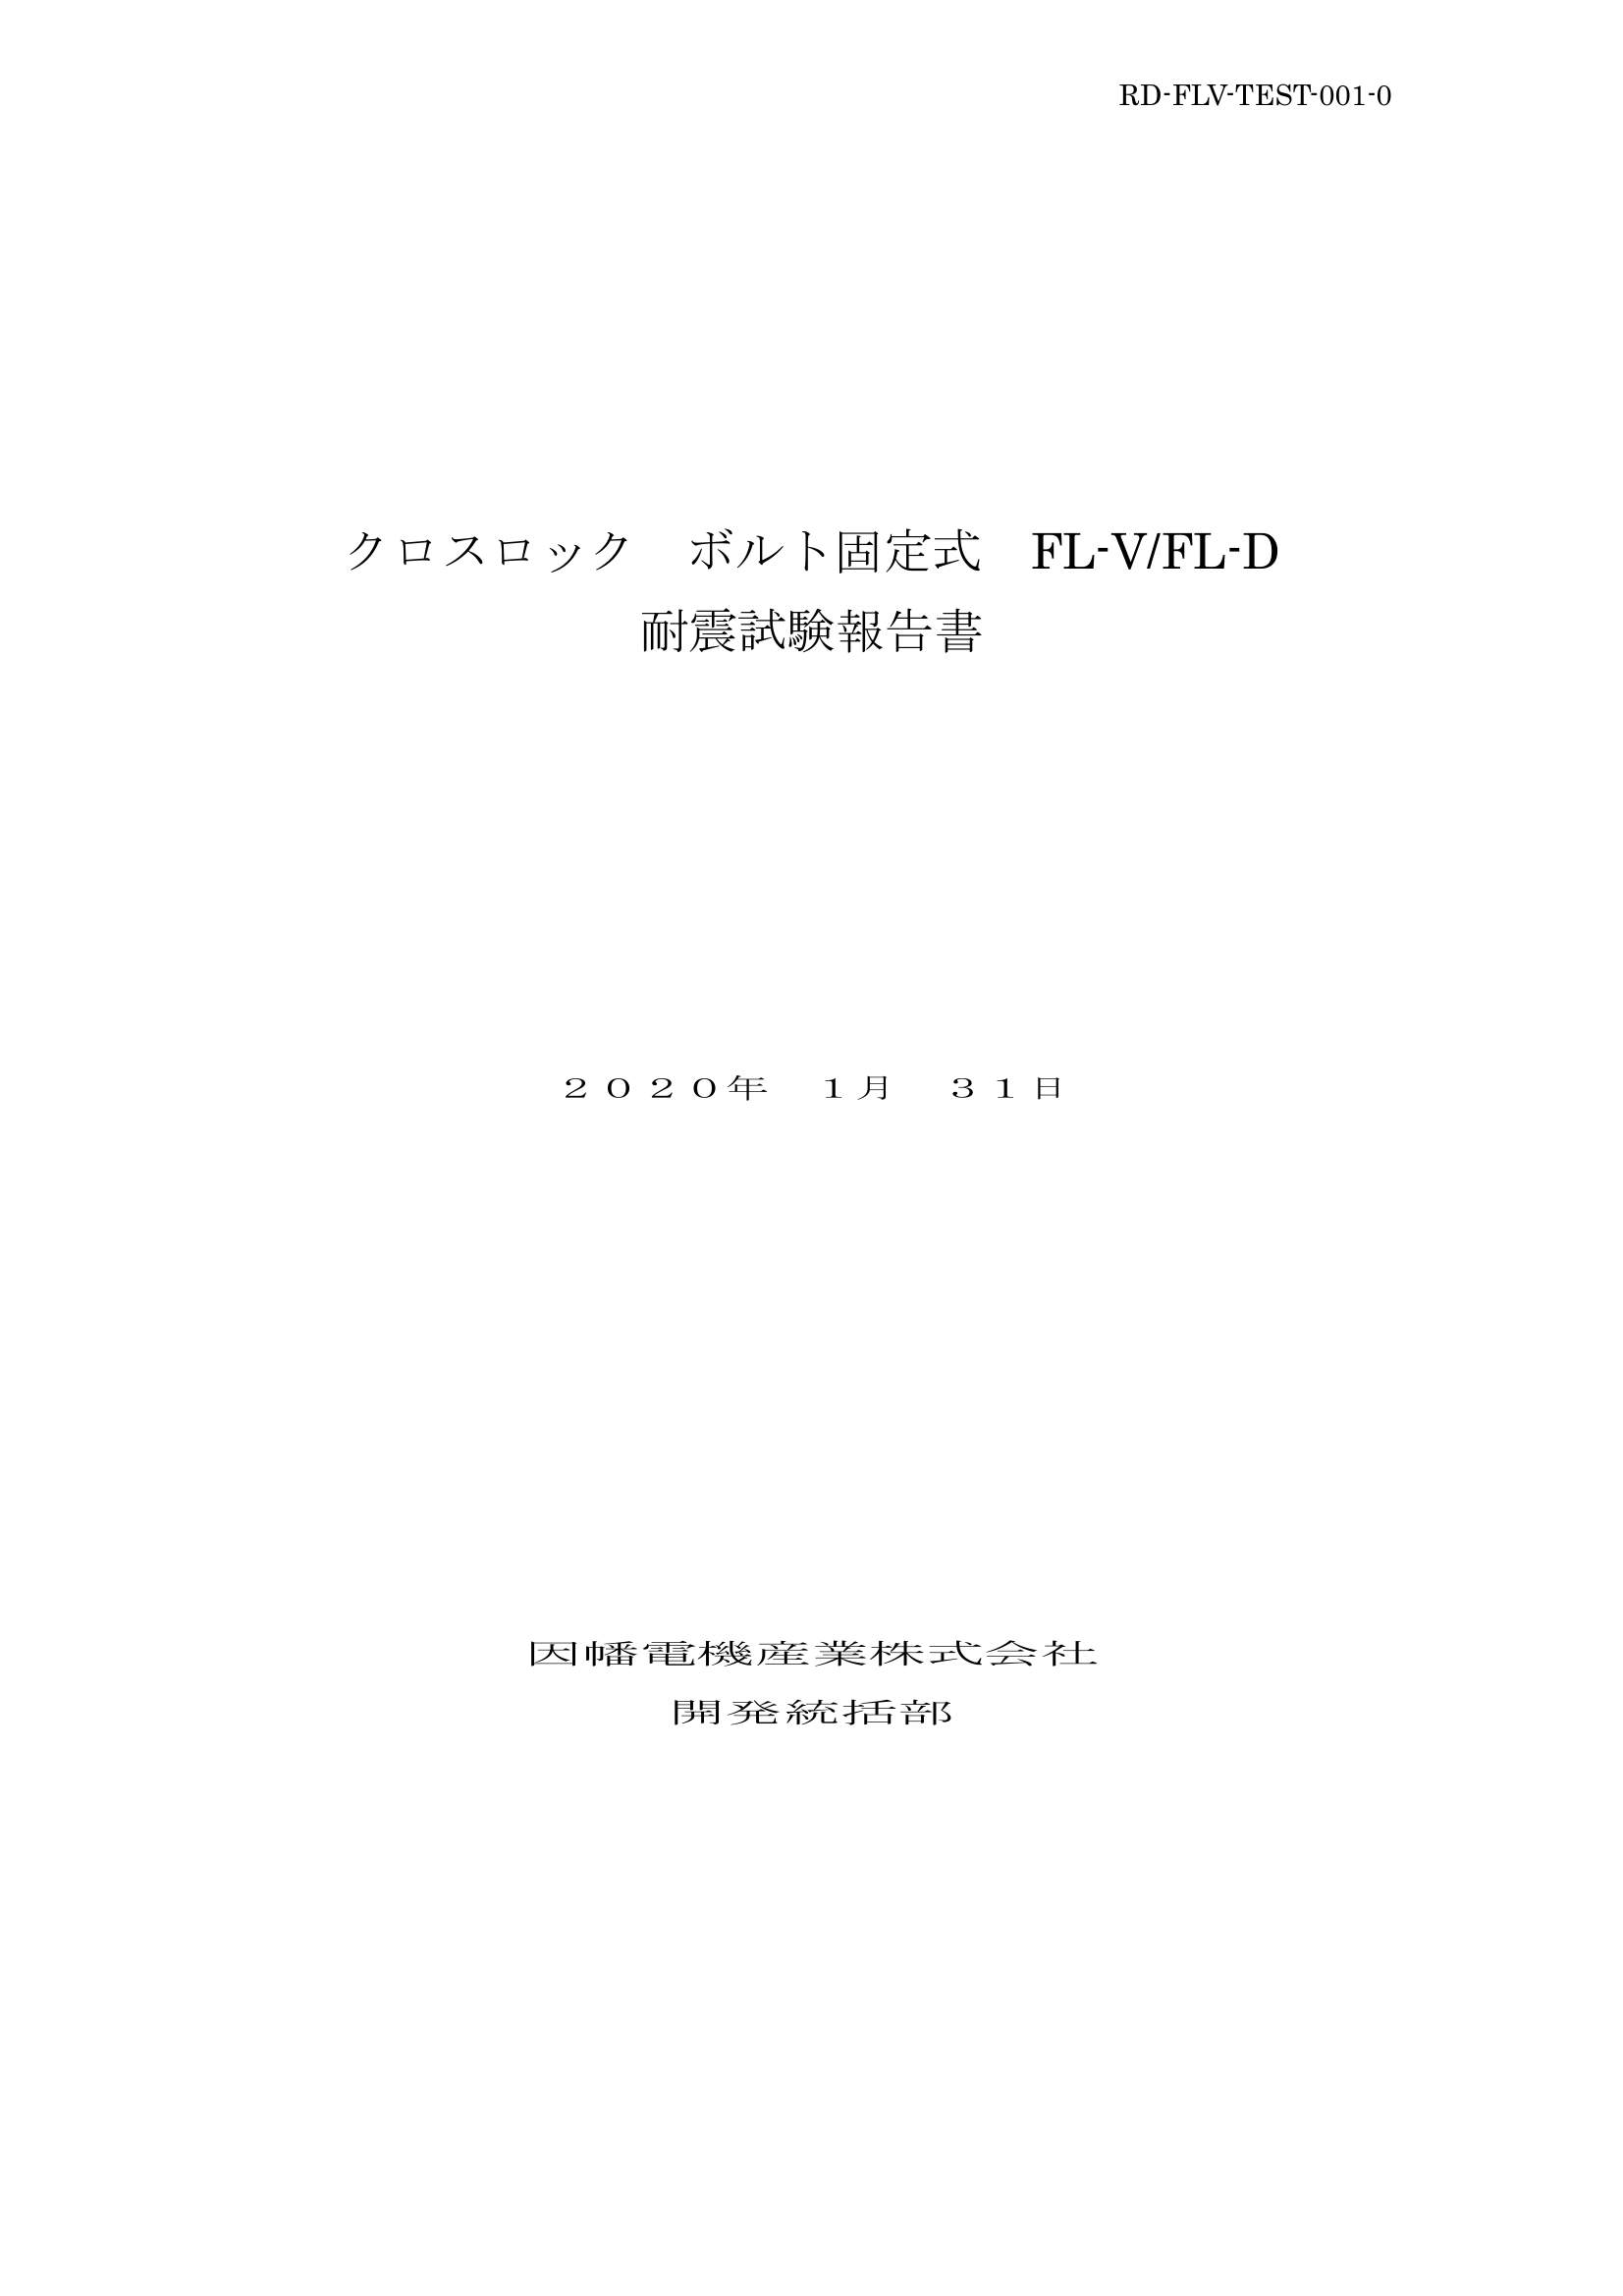 FL-V_耐震試験報告書_20200131.pdf